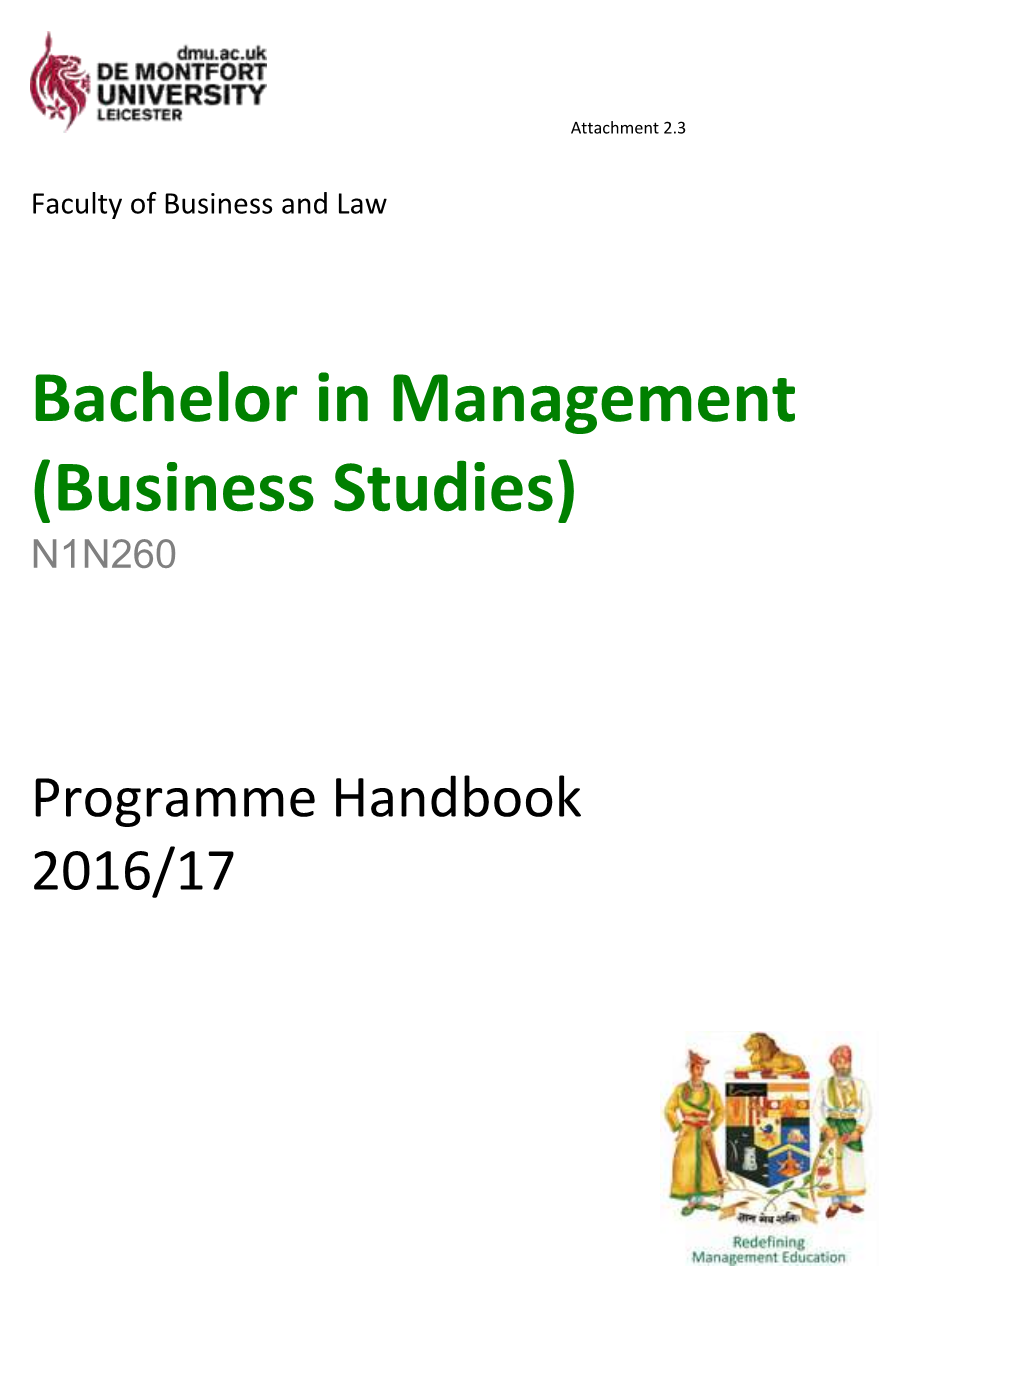 Bachelor in Management (Business Studies) N1N260